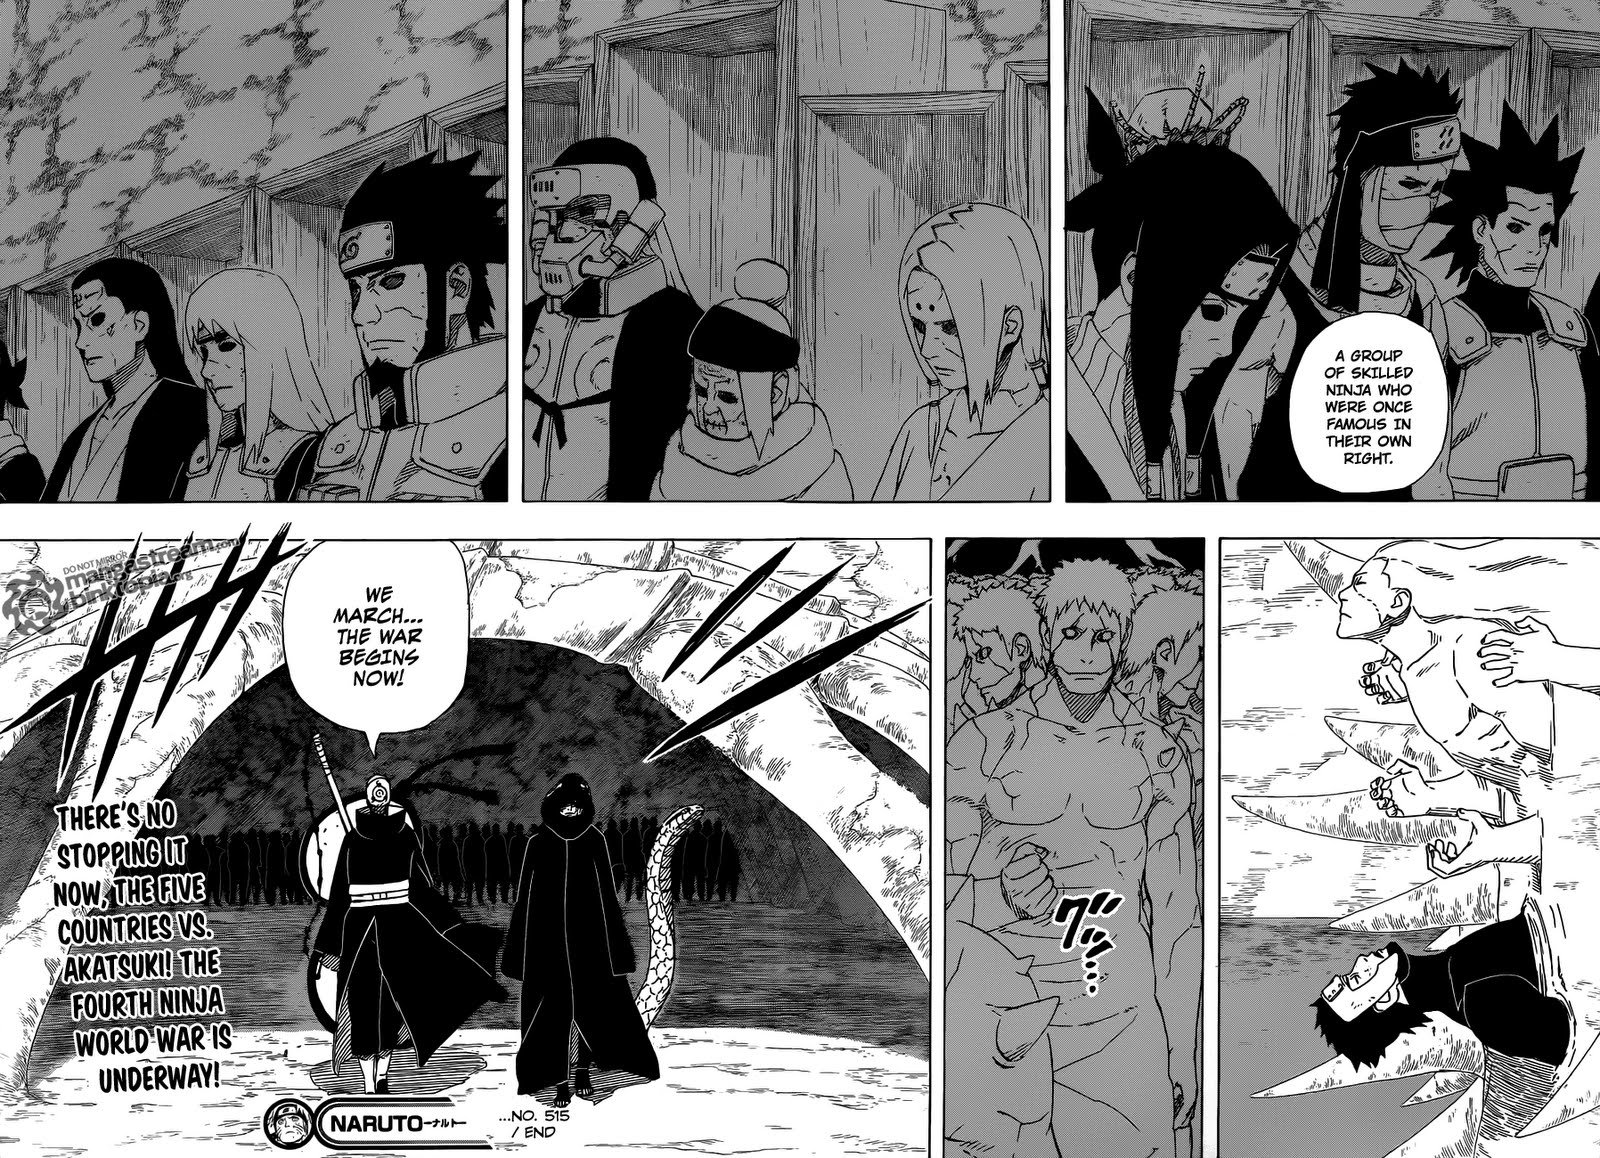 Naruto Shippuden Manga Chapter 515 - Image 20-21